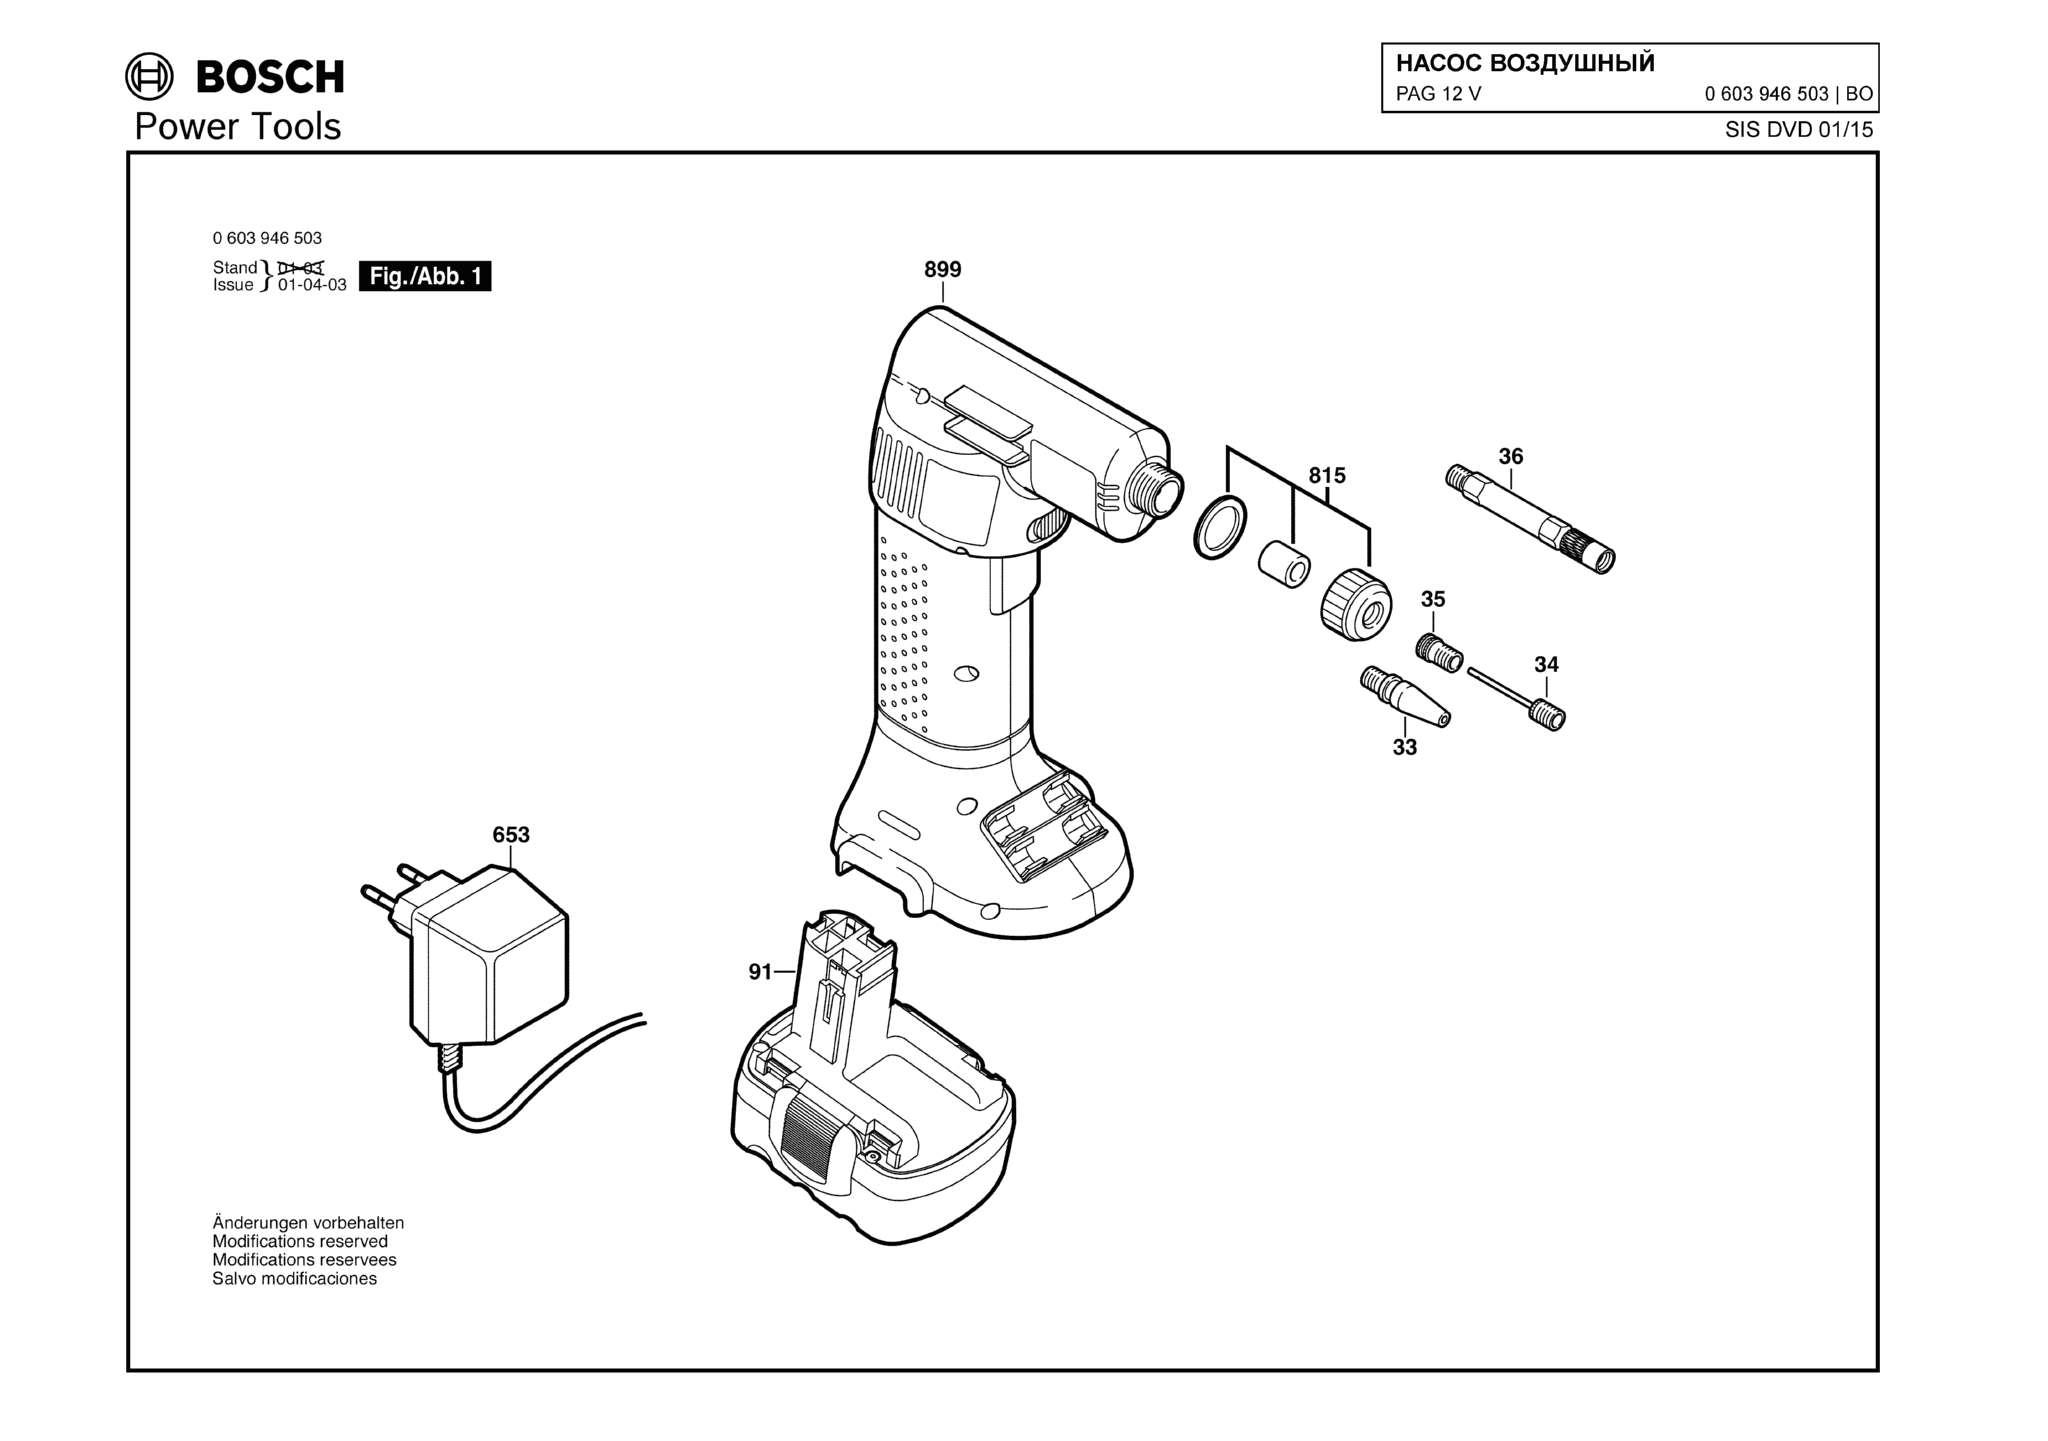 Запчасти, схема и деталировка Bosch PAG 12 V (ТИП 0603946503)